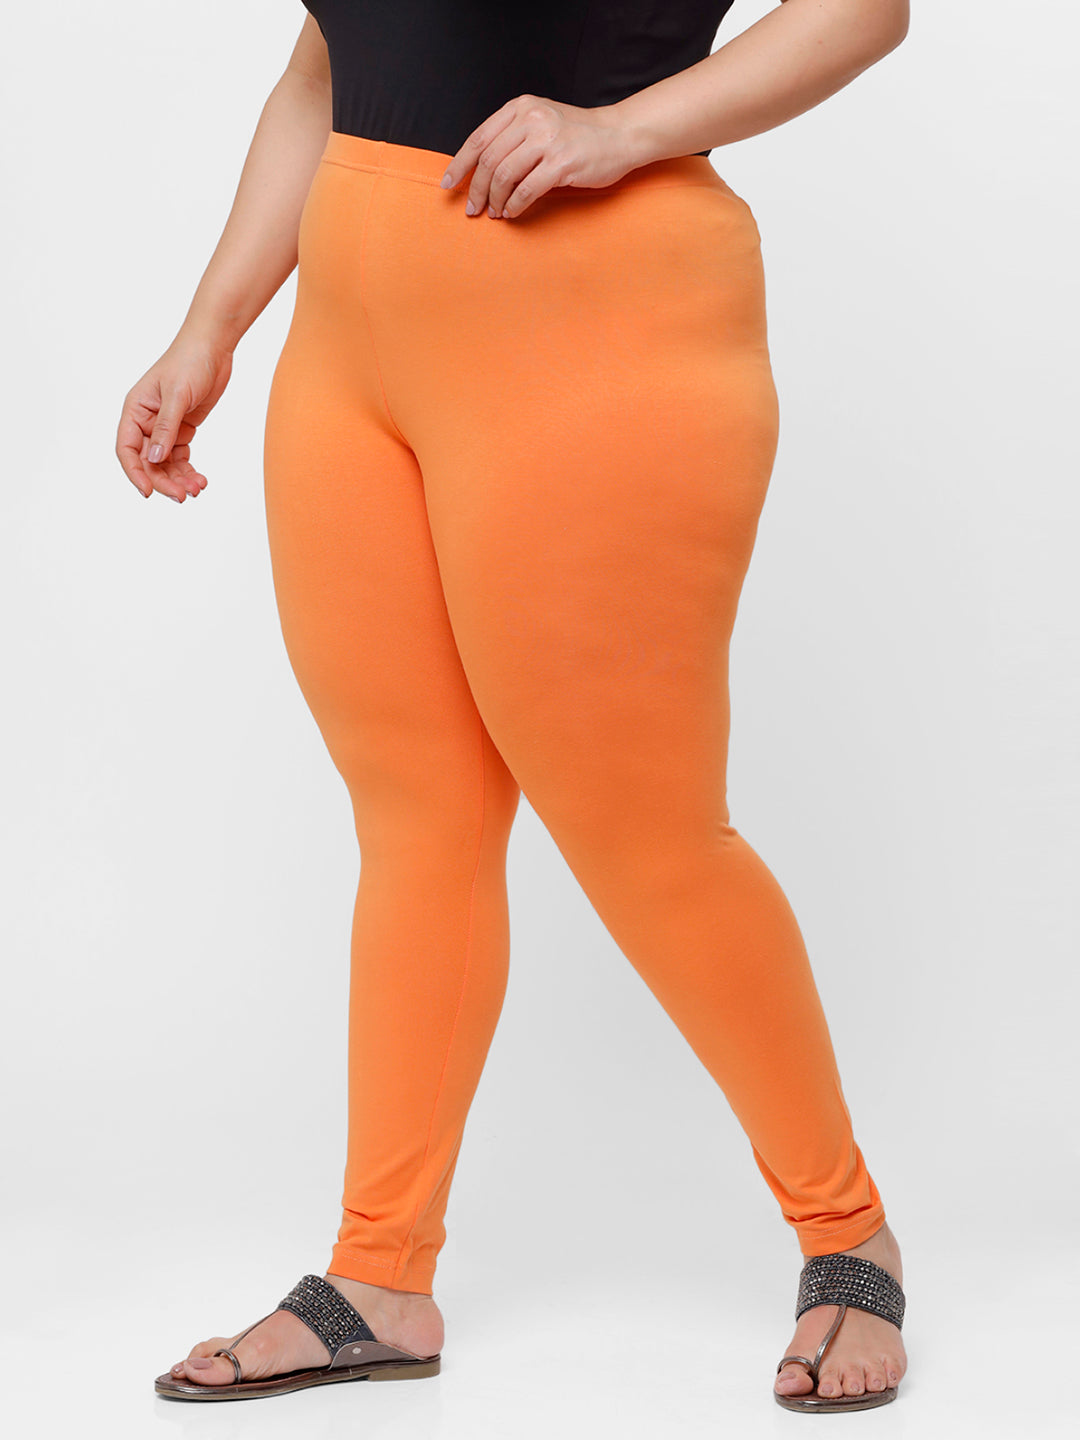 Orange Orange Ankle Length Legging, Size: S, M, L, XL,XXL,XXXL at Rs 100 in  Ahmedabad